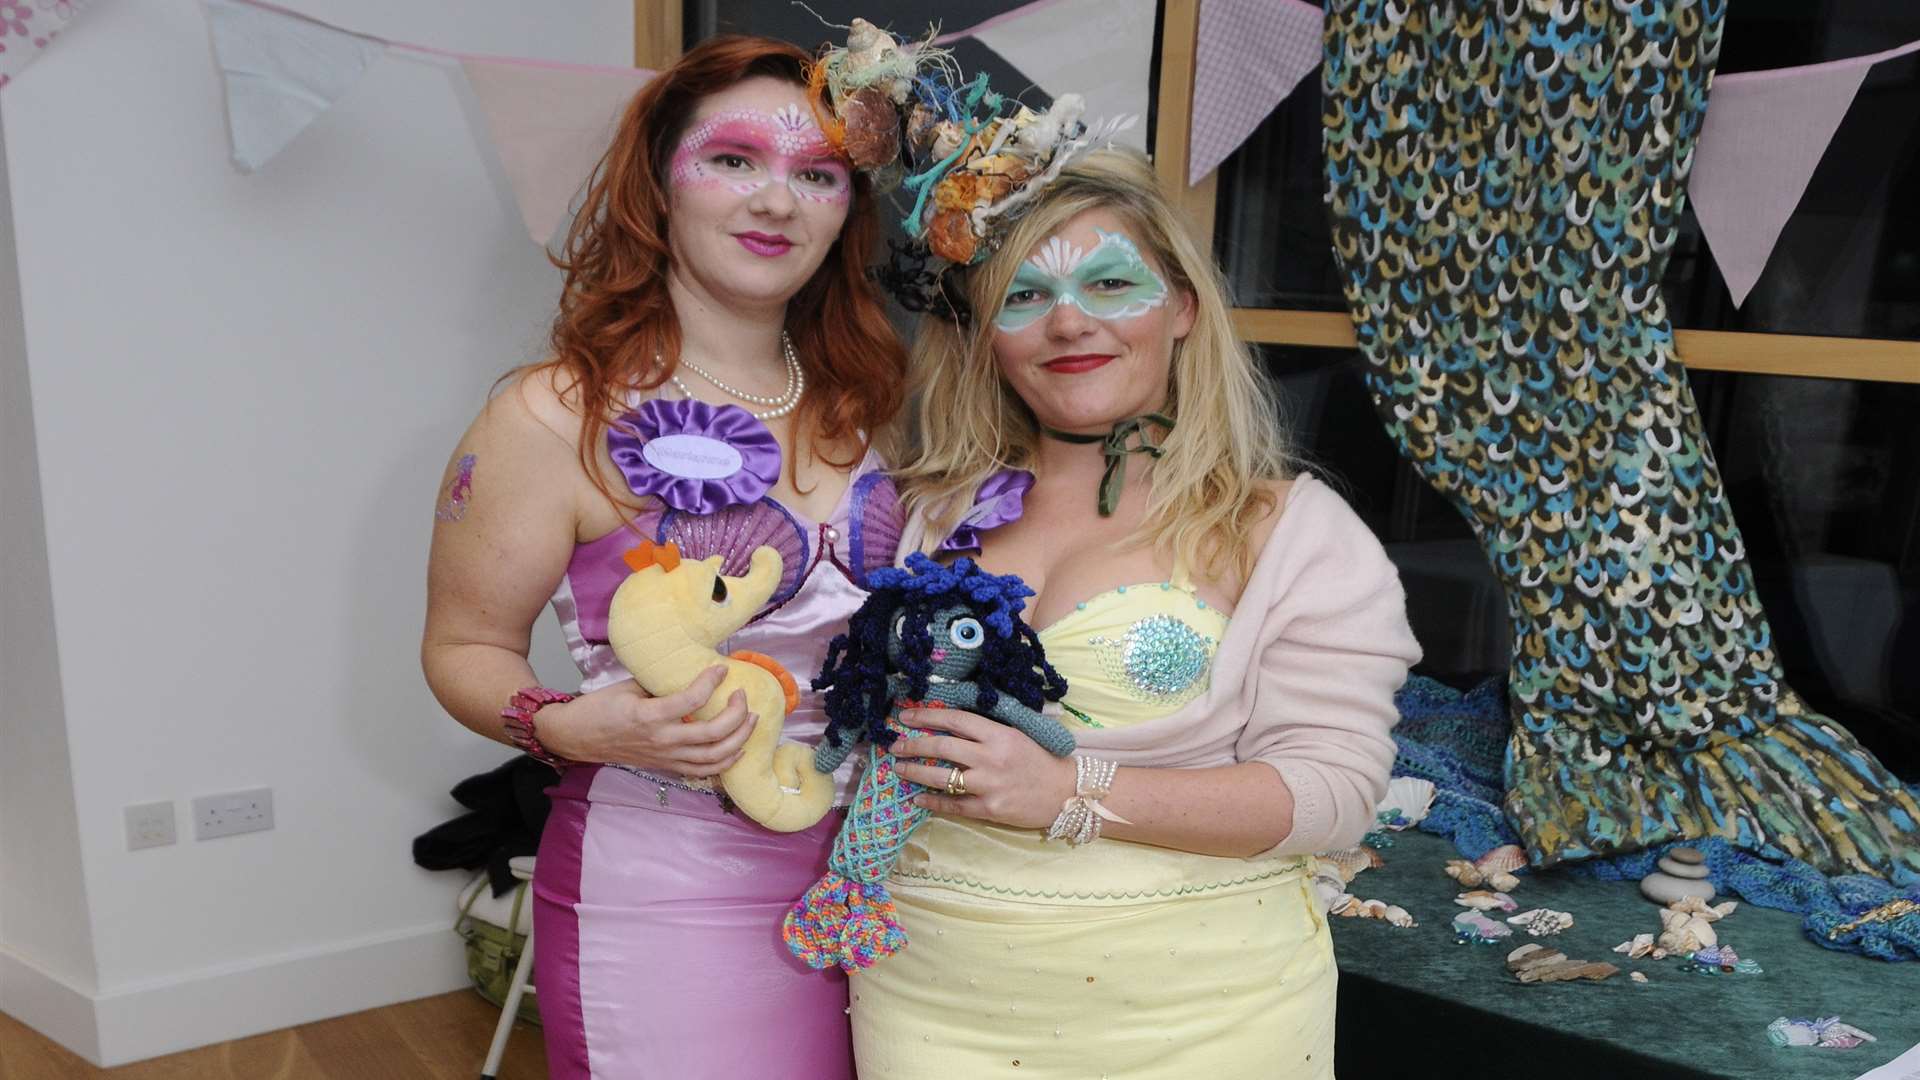 Fancy dress at the Mermaid Festival